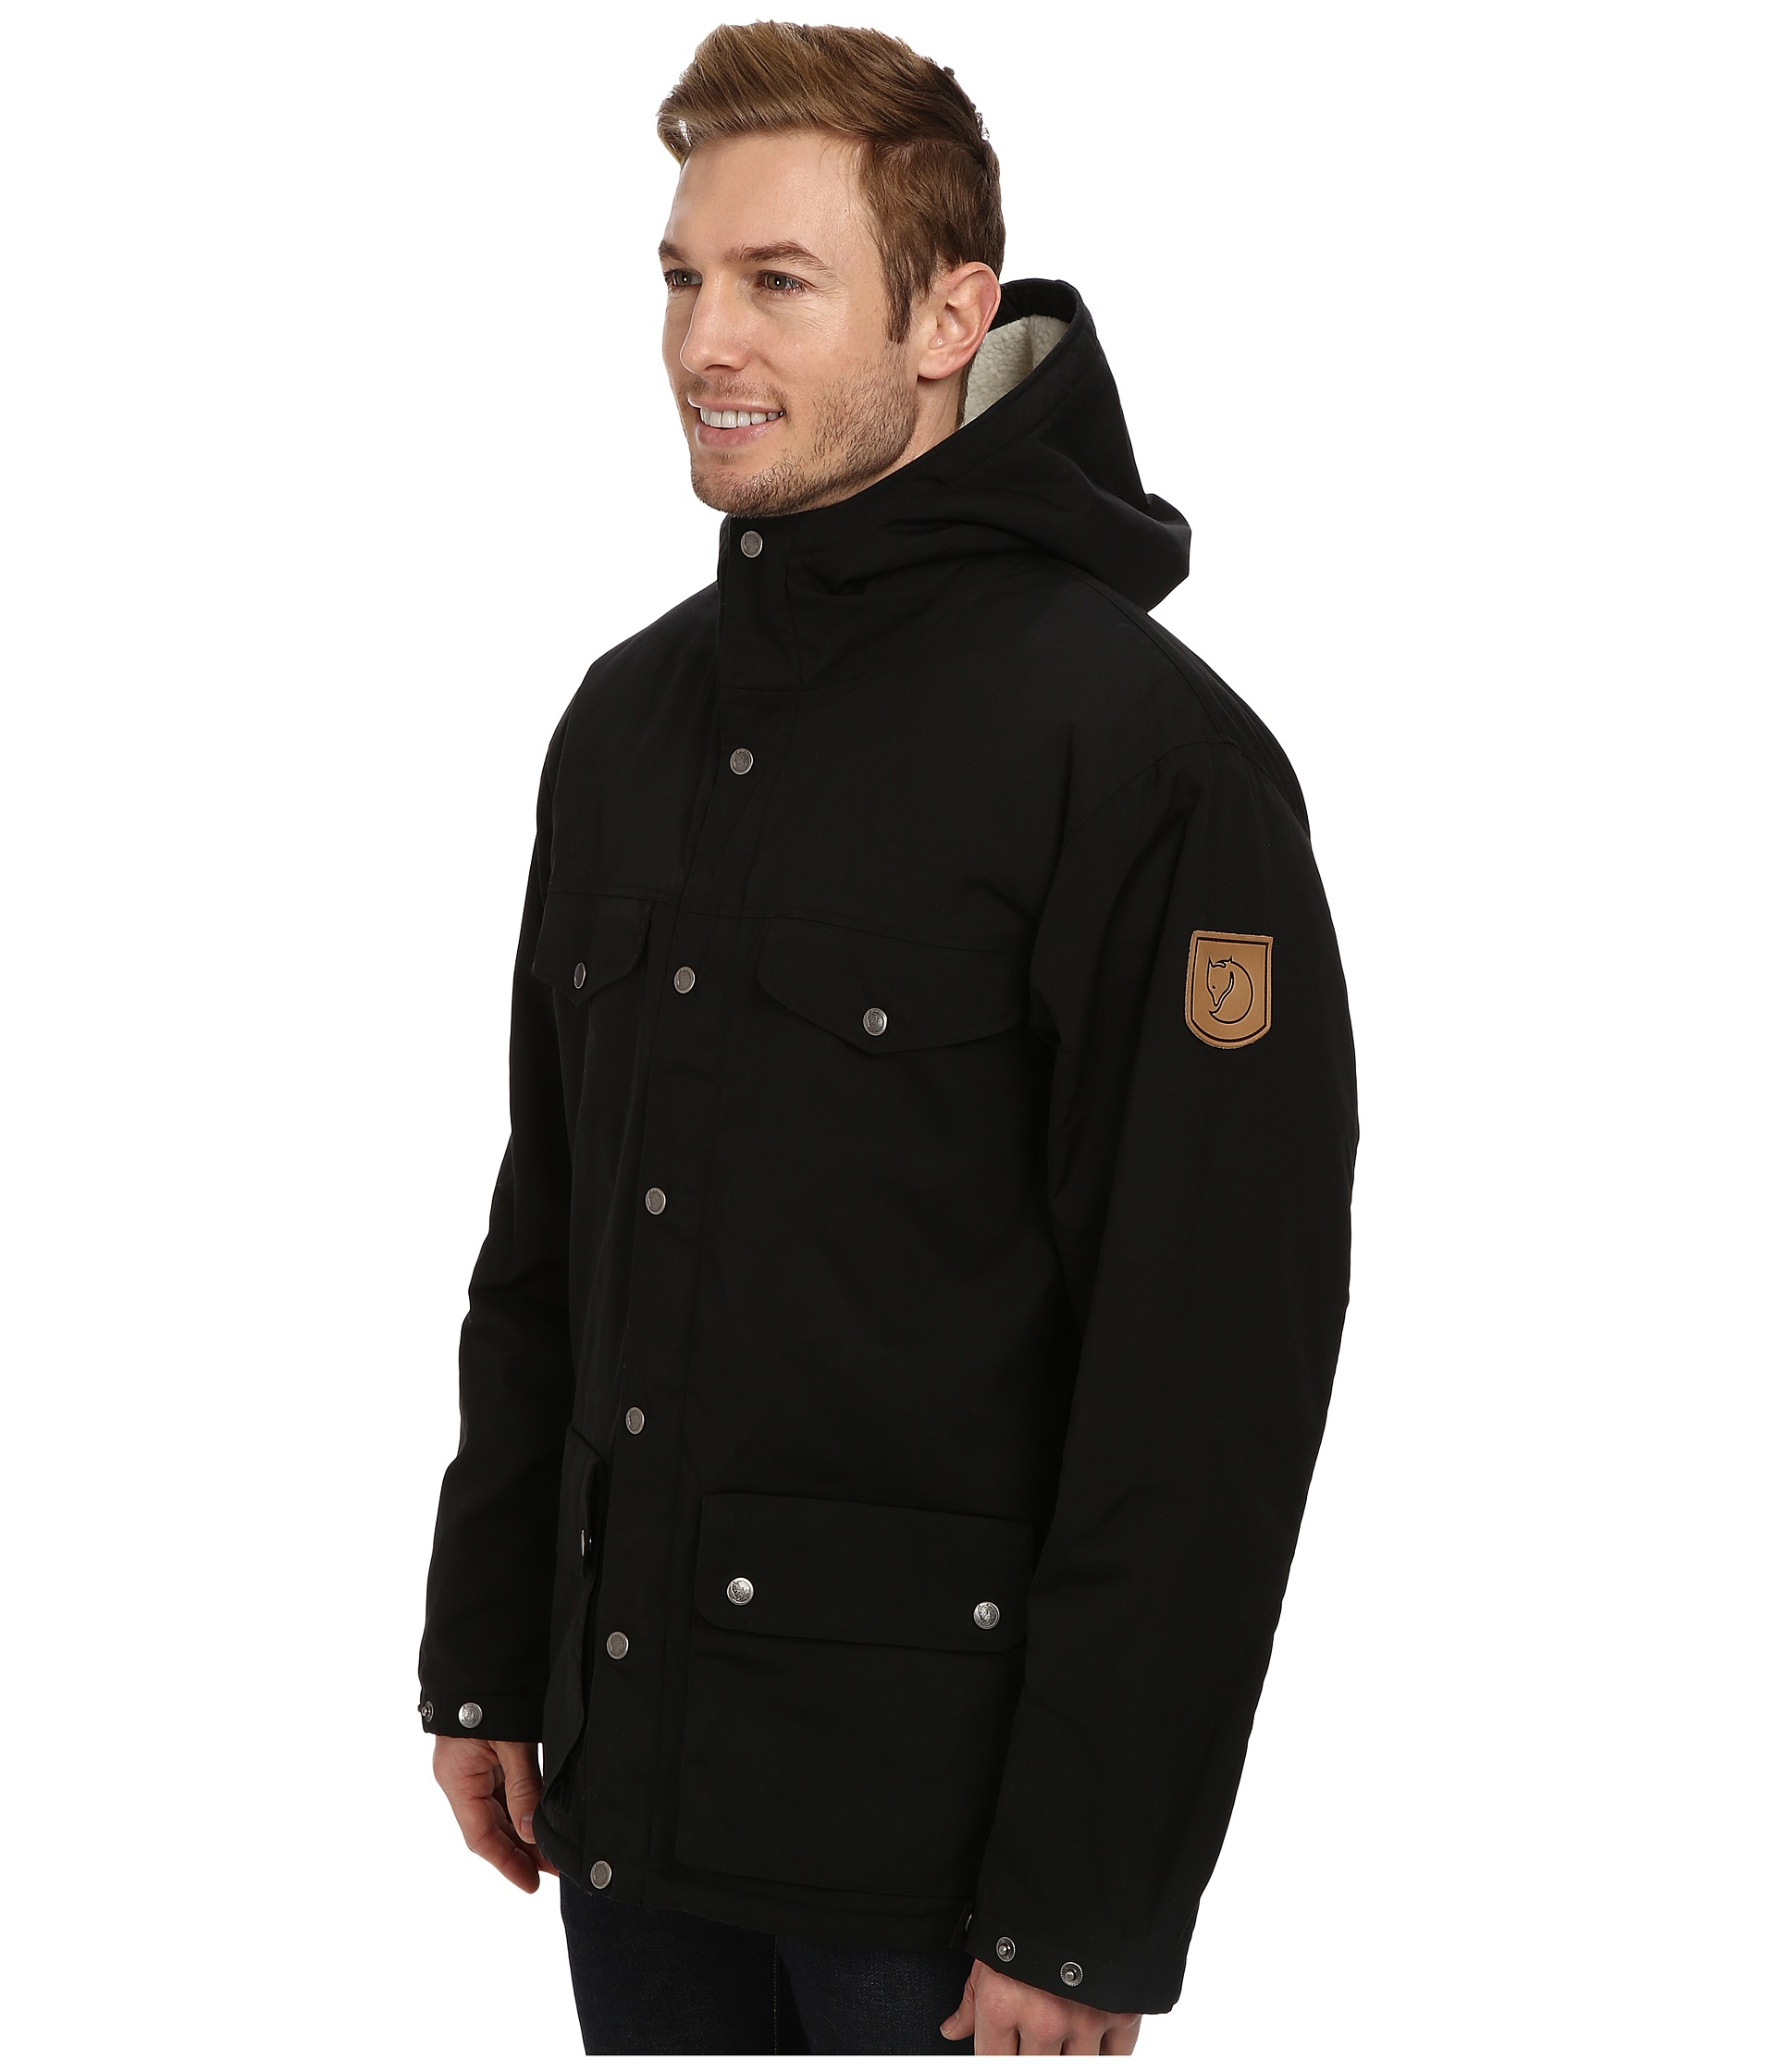 Fjallraven Leather Greenland Winter Jacket in Black for Men - Lyst